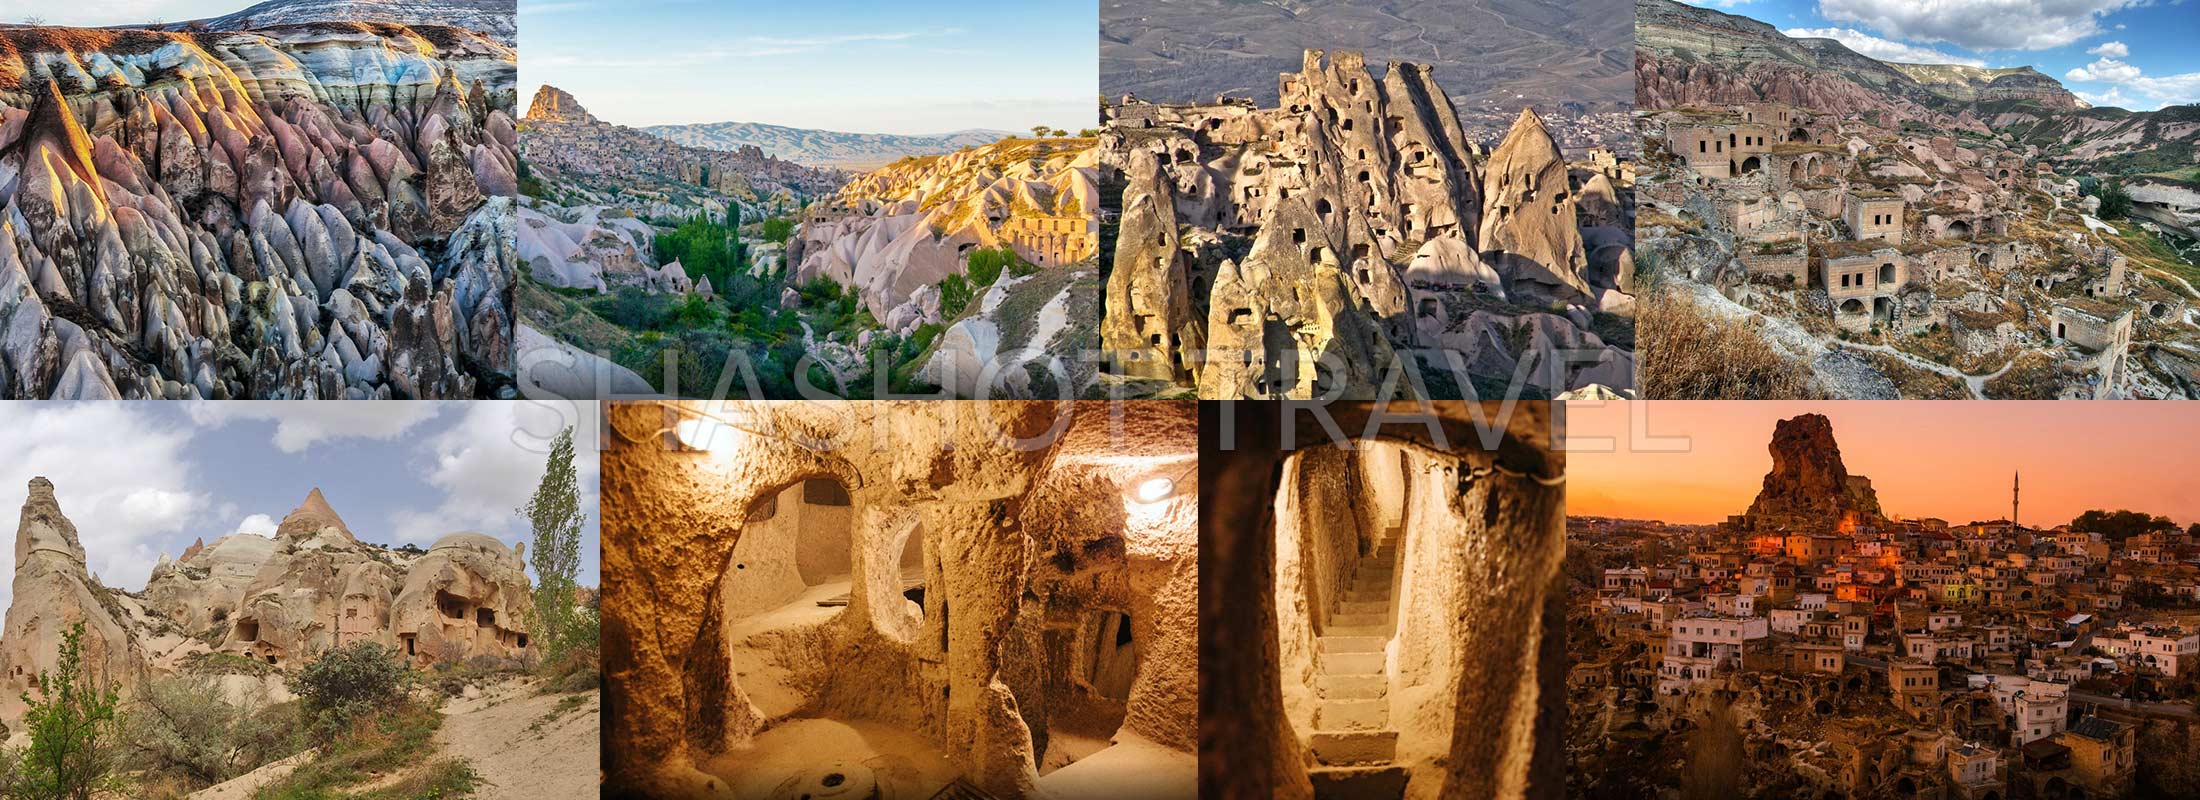 cappadocia-Tour-a-pie-turquia-shashot-travel